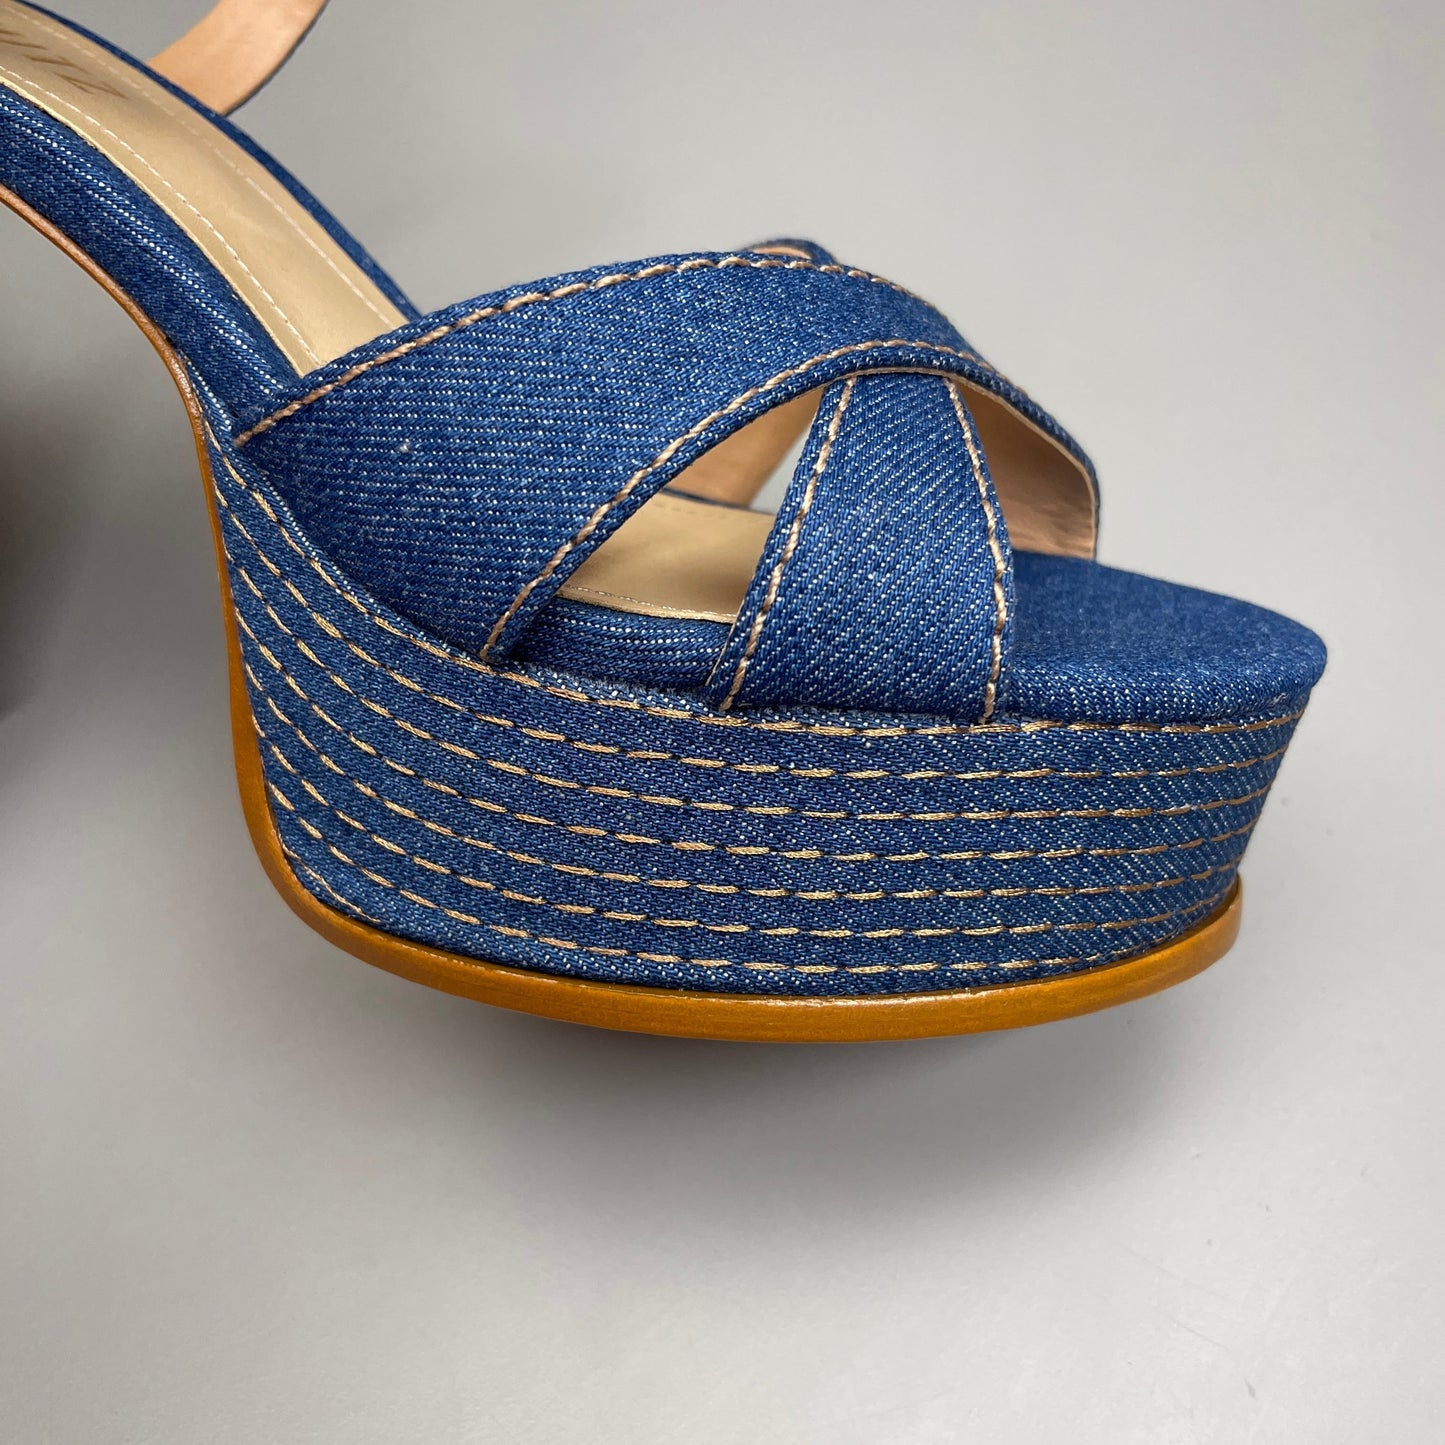 SCHUTZ Keefa Casual Denim Women's 4" Heeled Sandal Platform Blue Sz 10B (New)